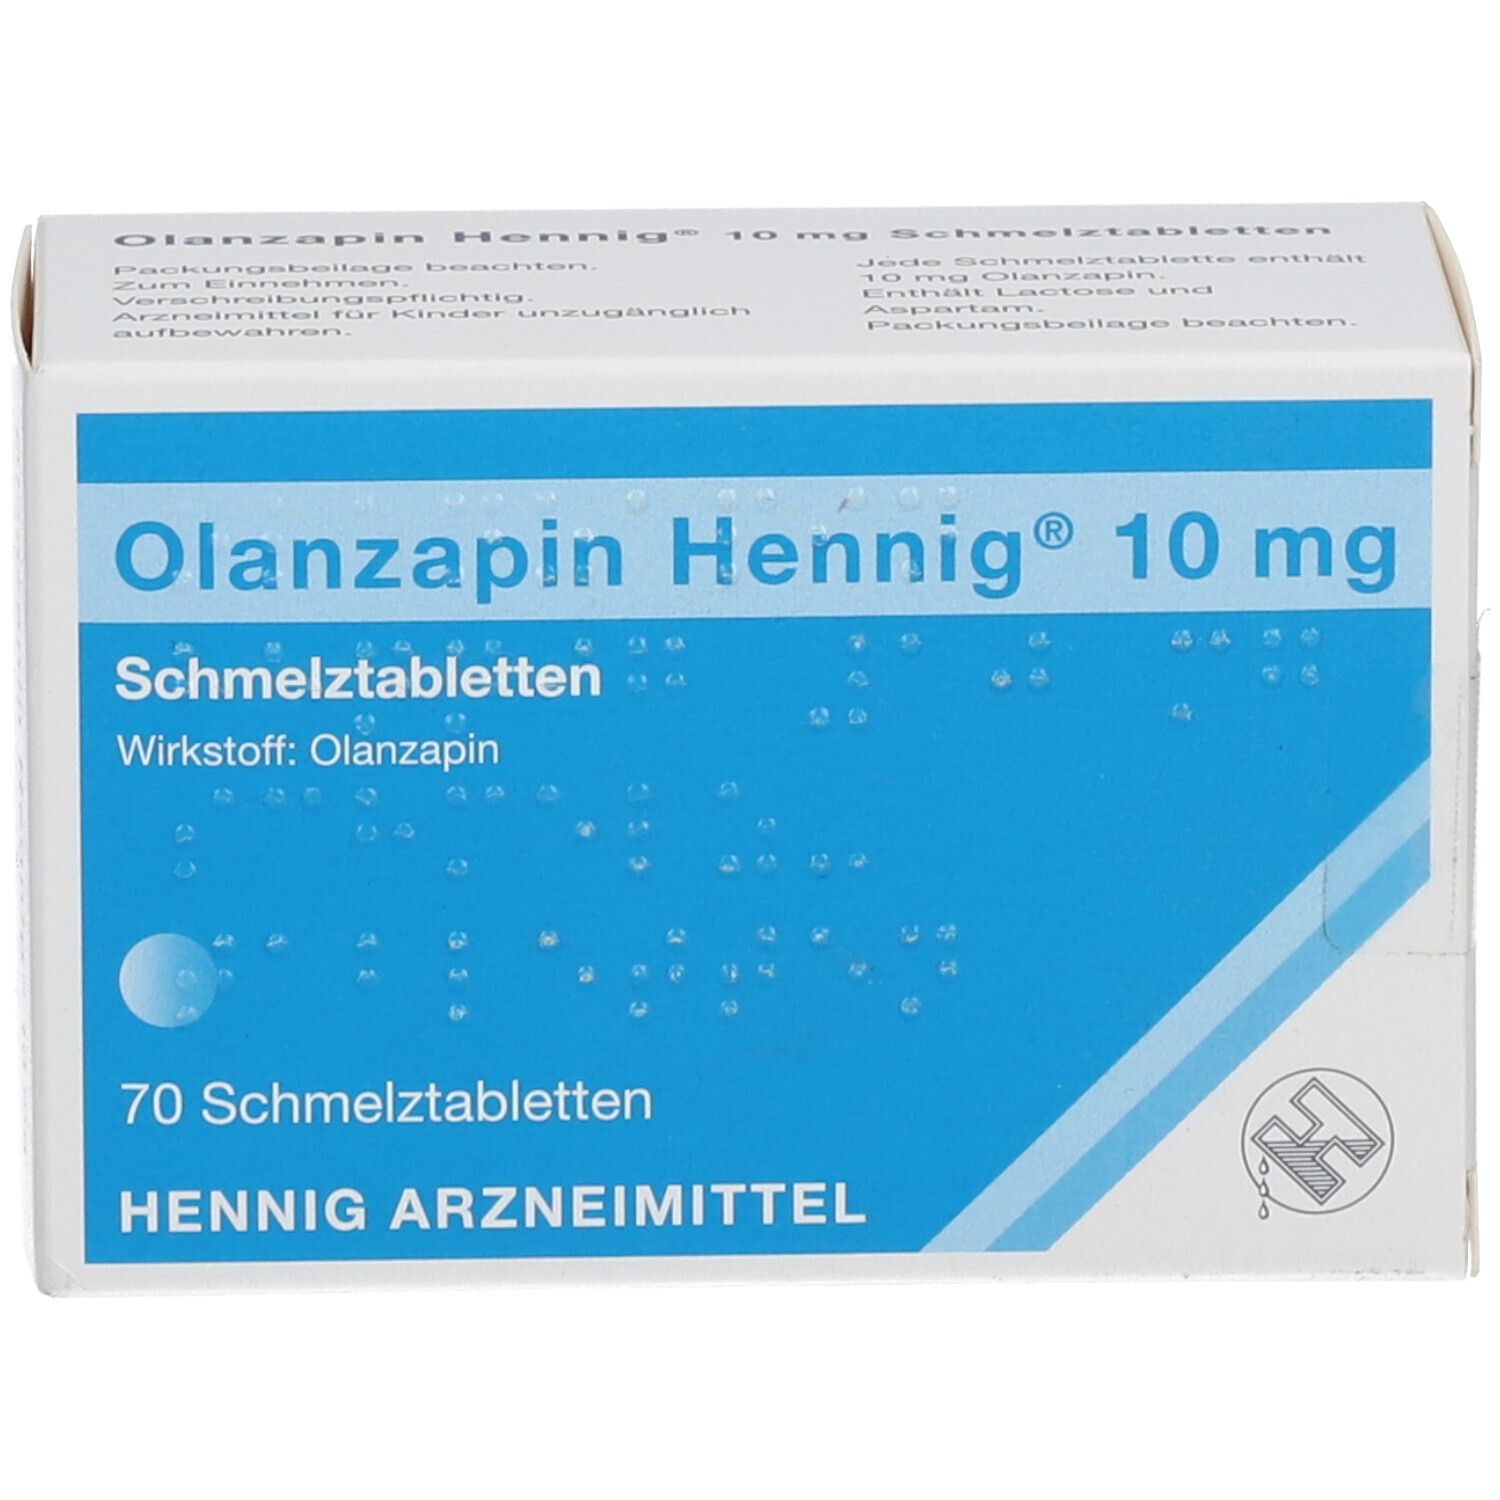 Olanzapin Hennig® 10 mg